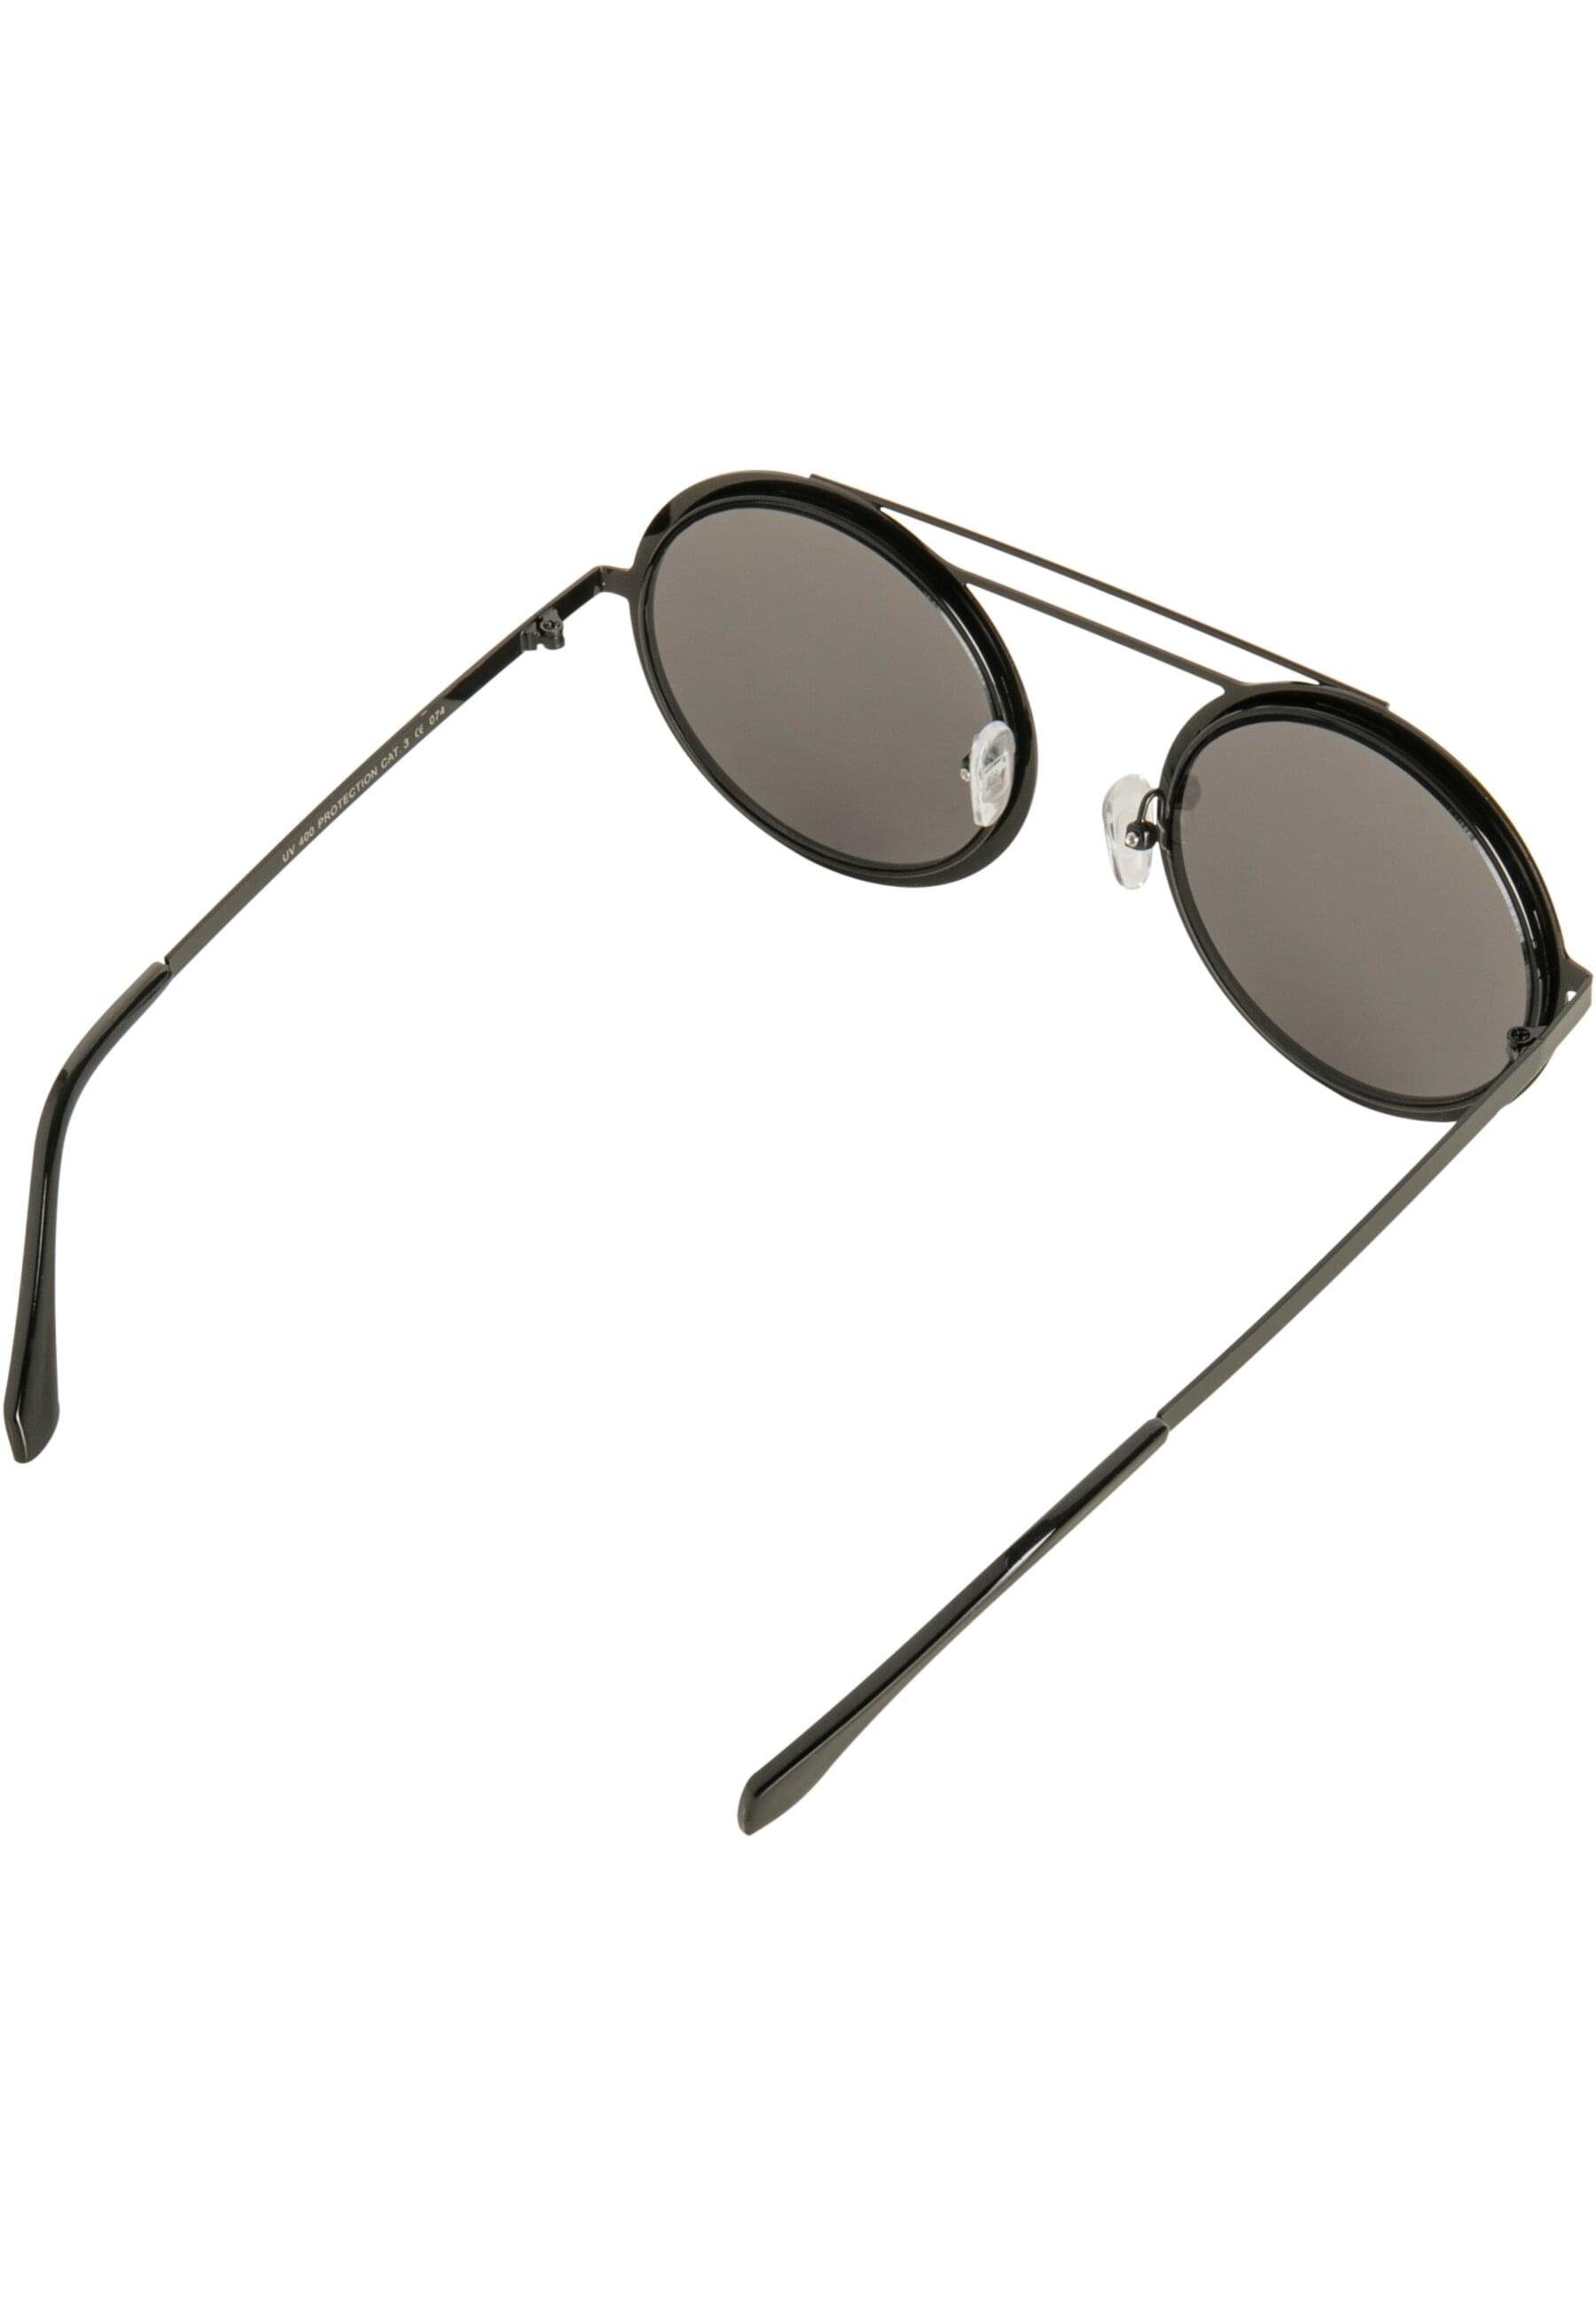 URBAN CLASSICS Sonnenbrille Unisex 104 Sunglasses Chain black/black